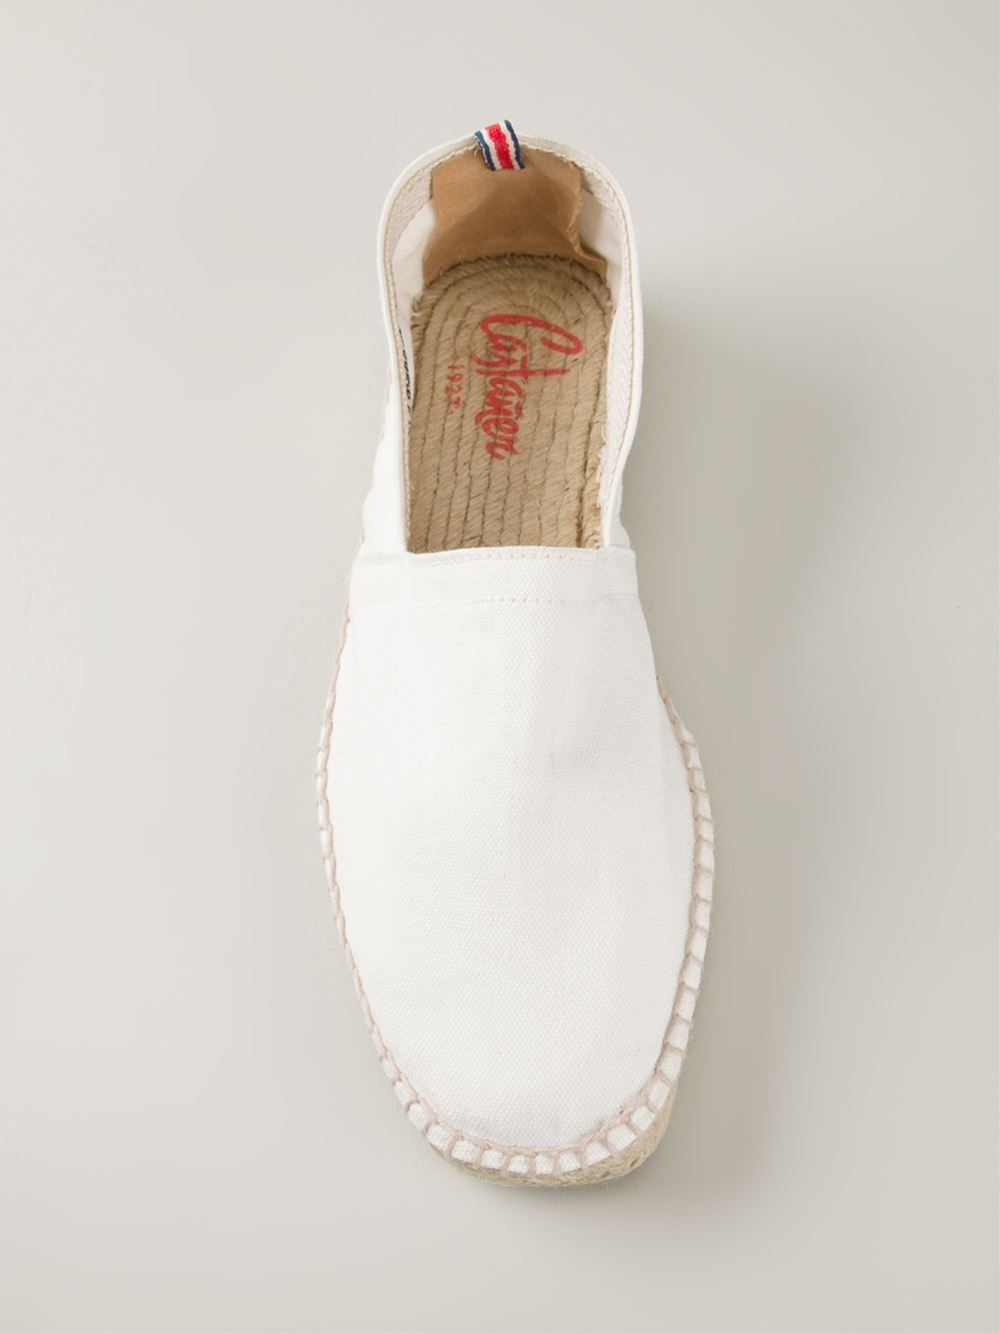 Lyst - Castaner Espadrille Shoes in White for Men